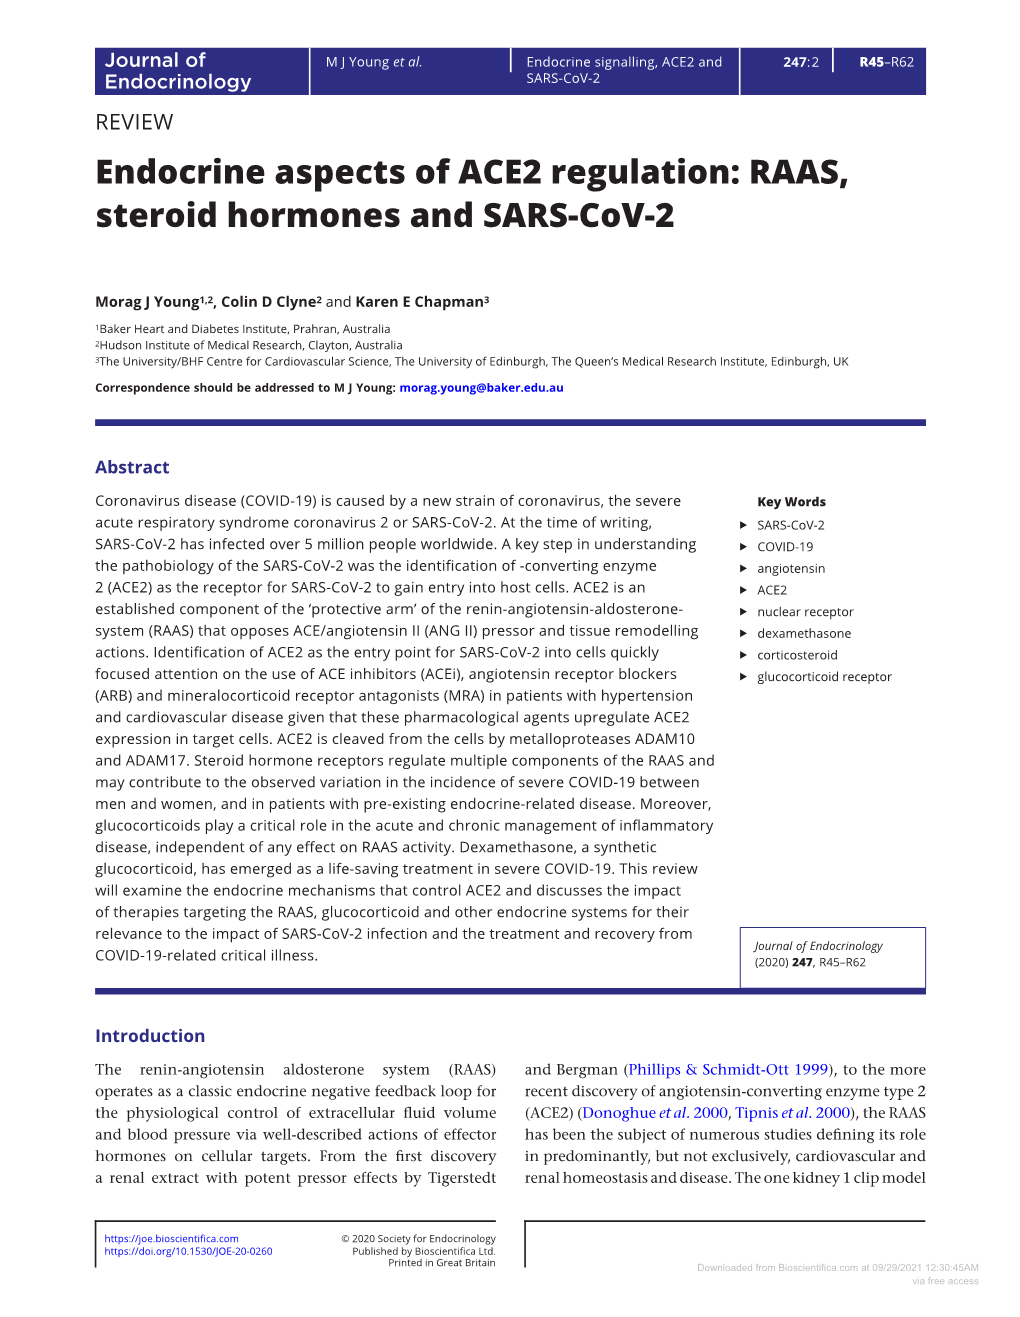 RAAS, Steroid Hormones and SARS-Cov-2